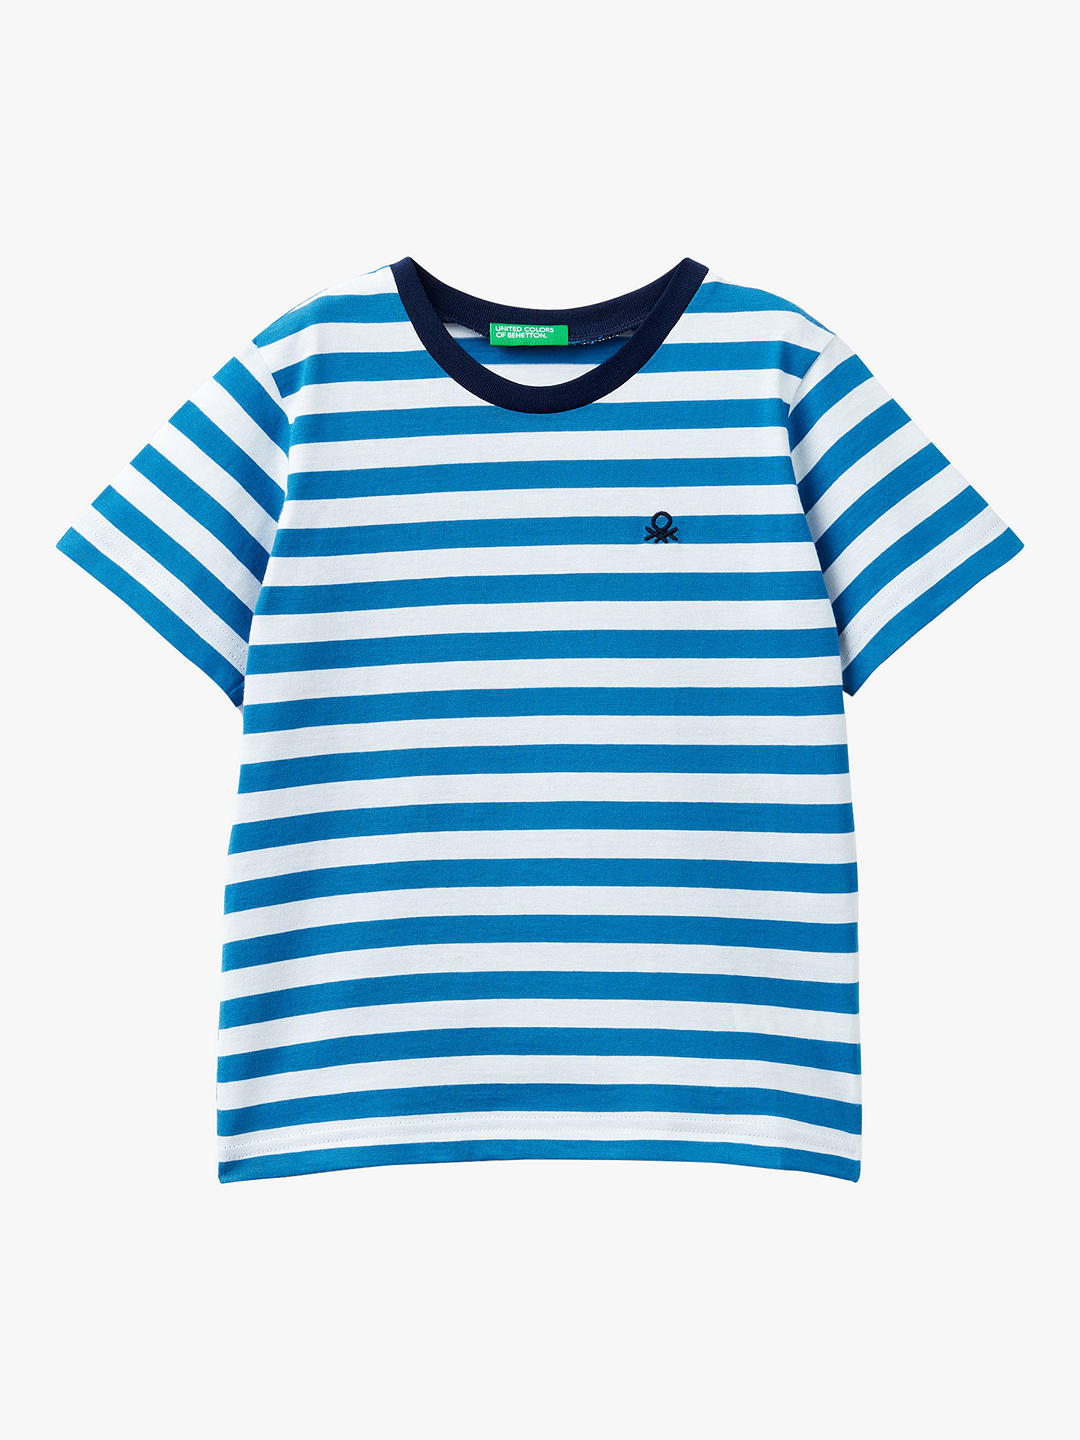 Benetton Kids' Stripe T-Shirt, Bluette